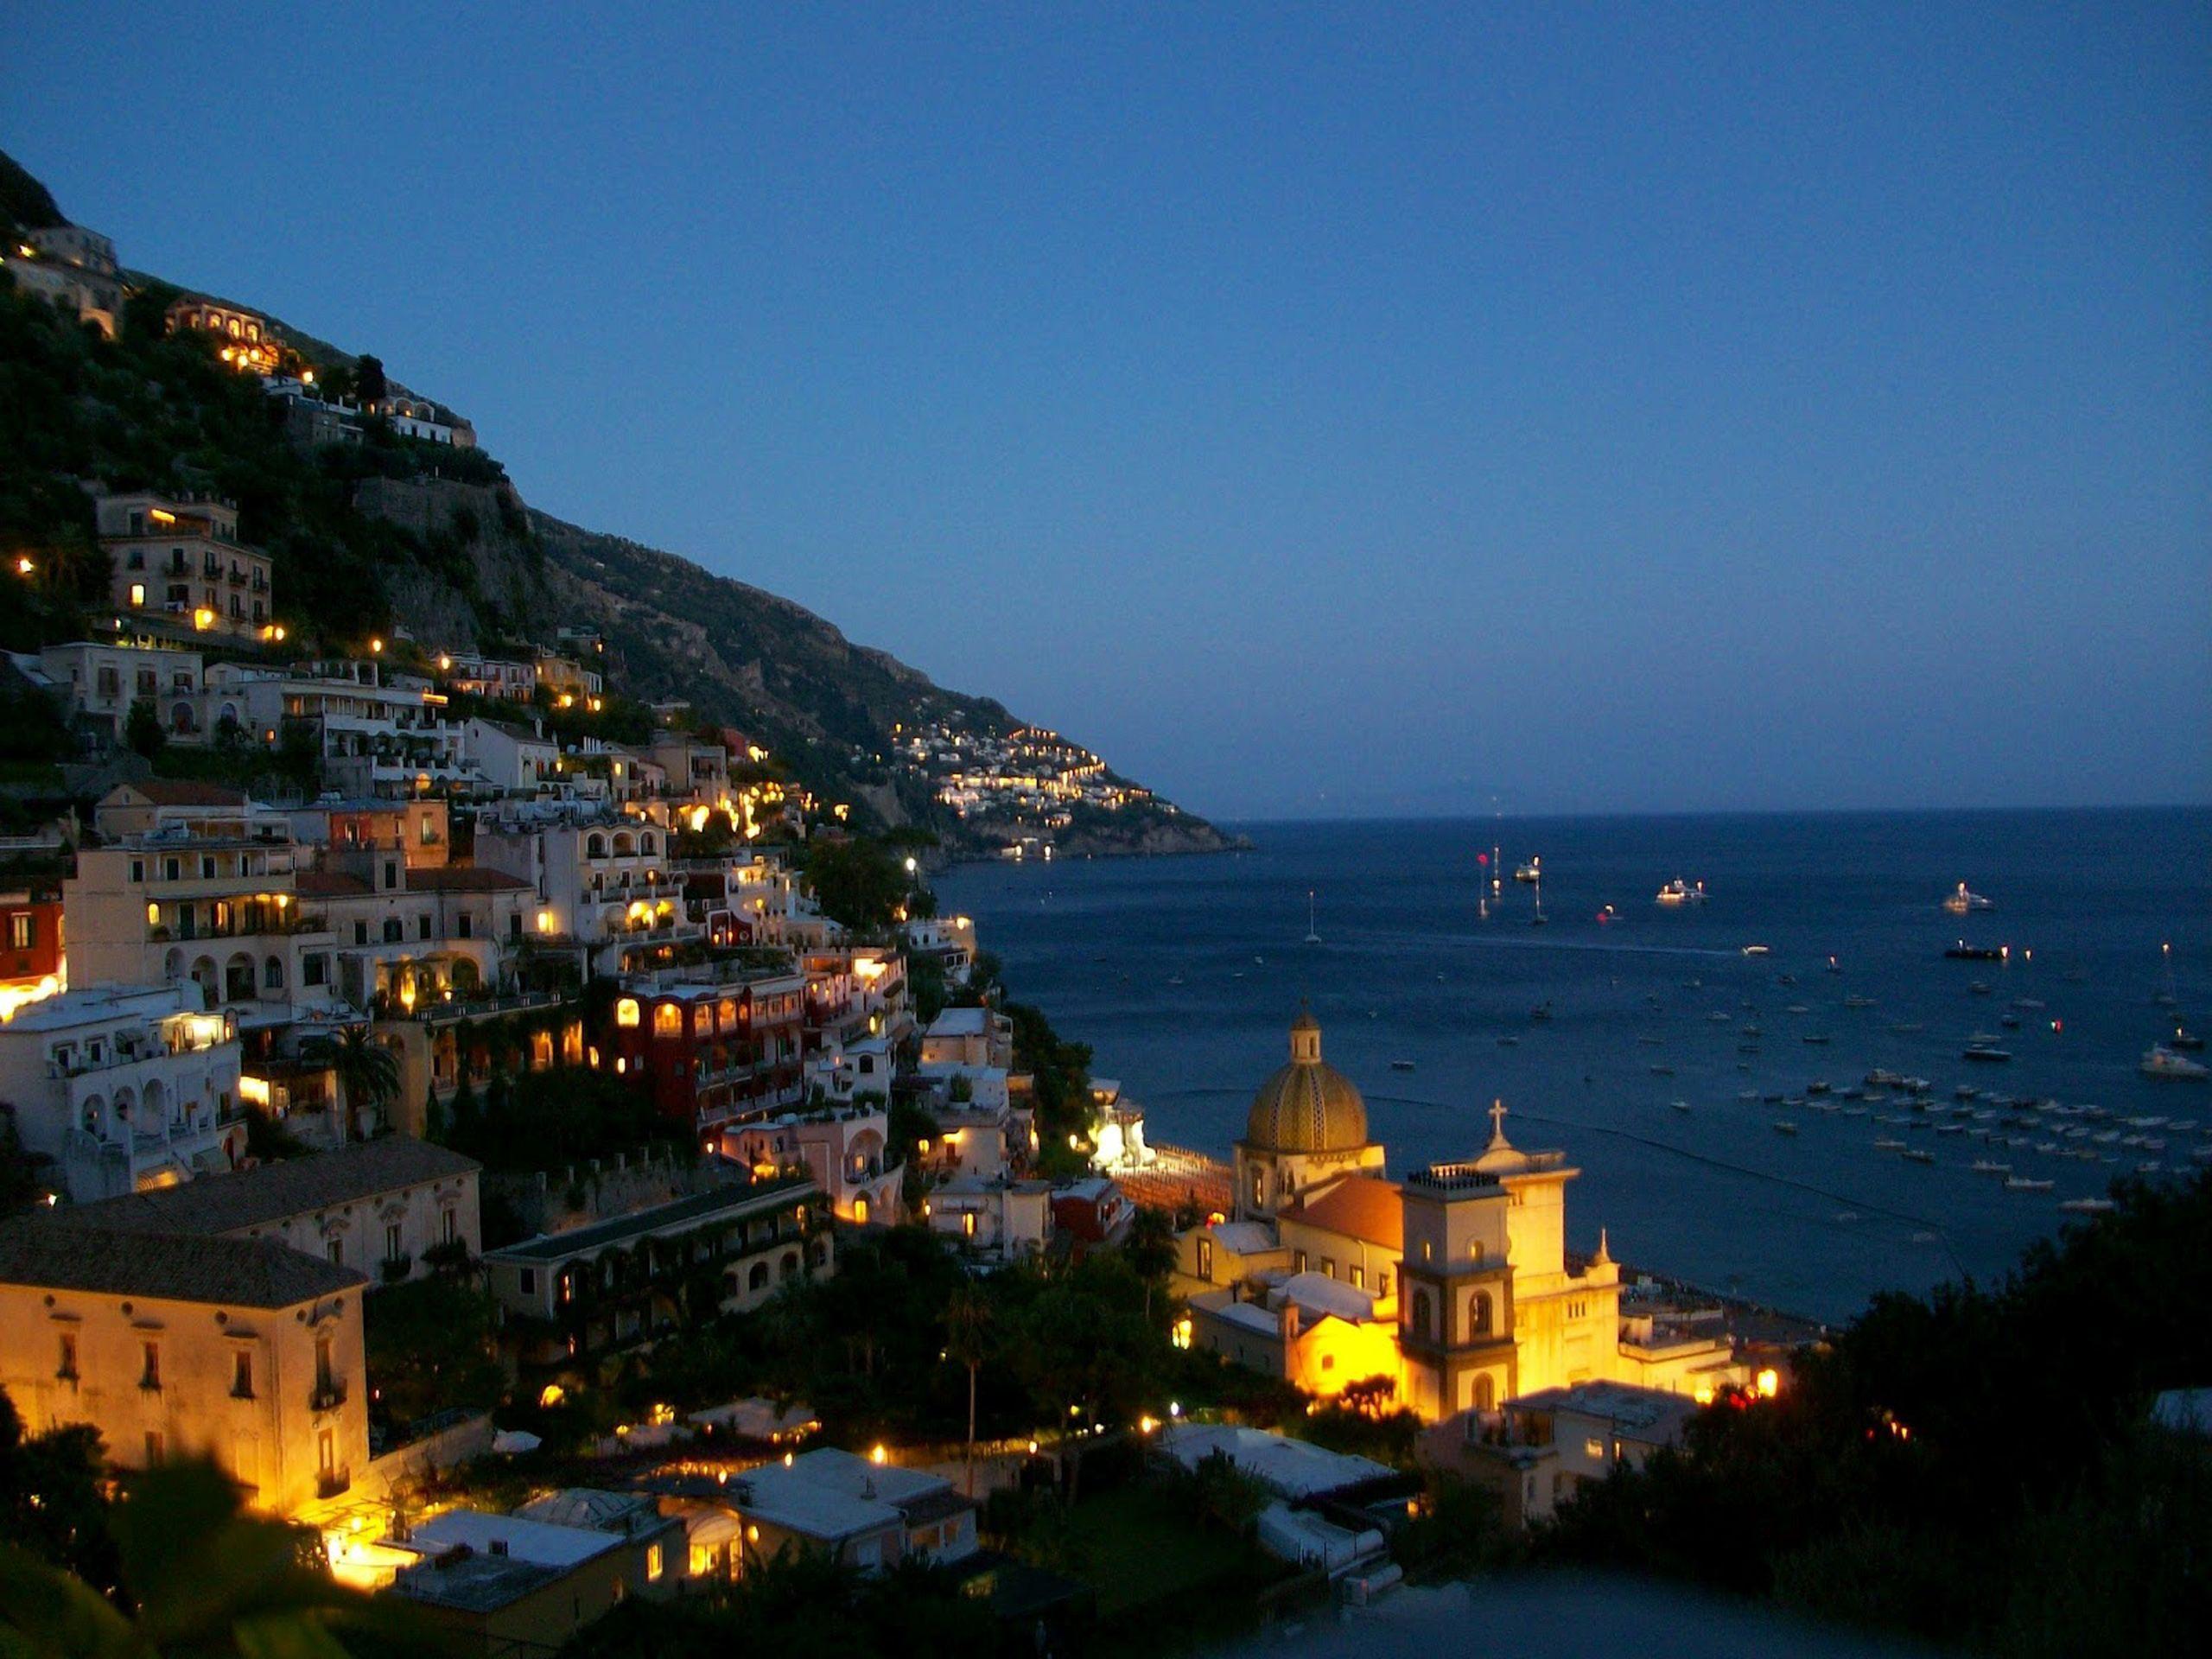 Evening lights at the resort in Amalfi, Italy wallpaper